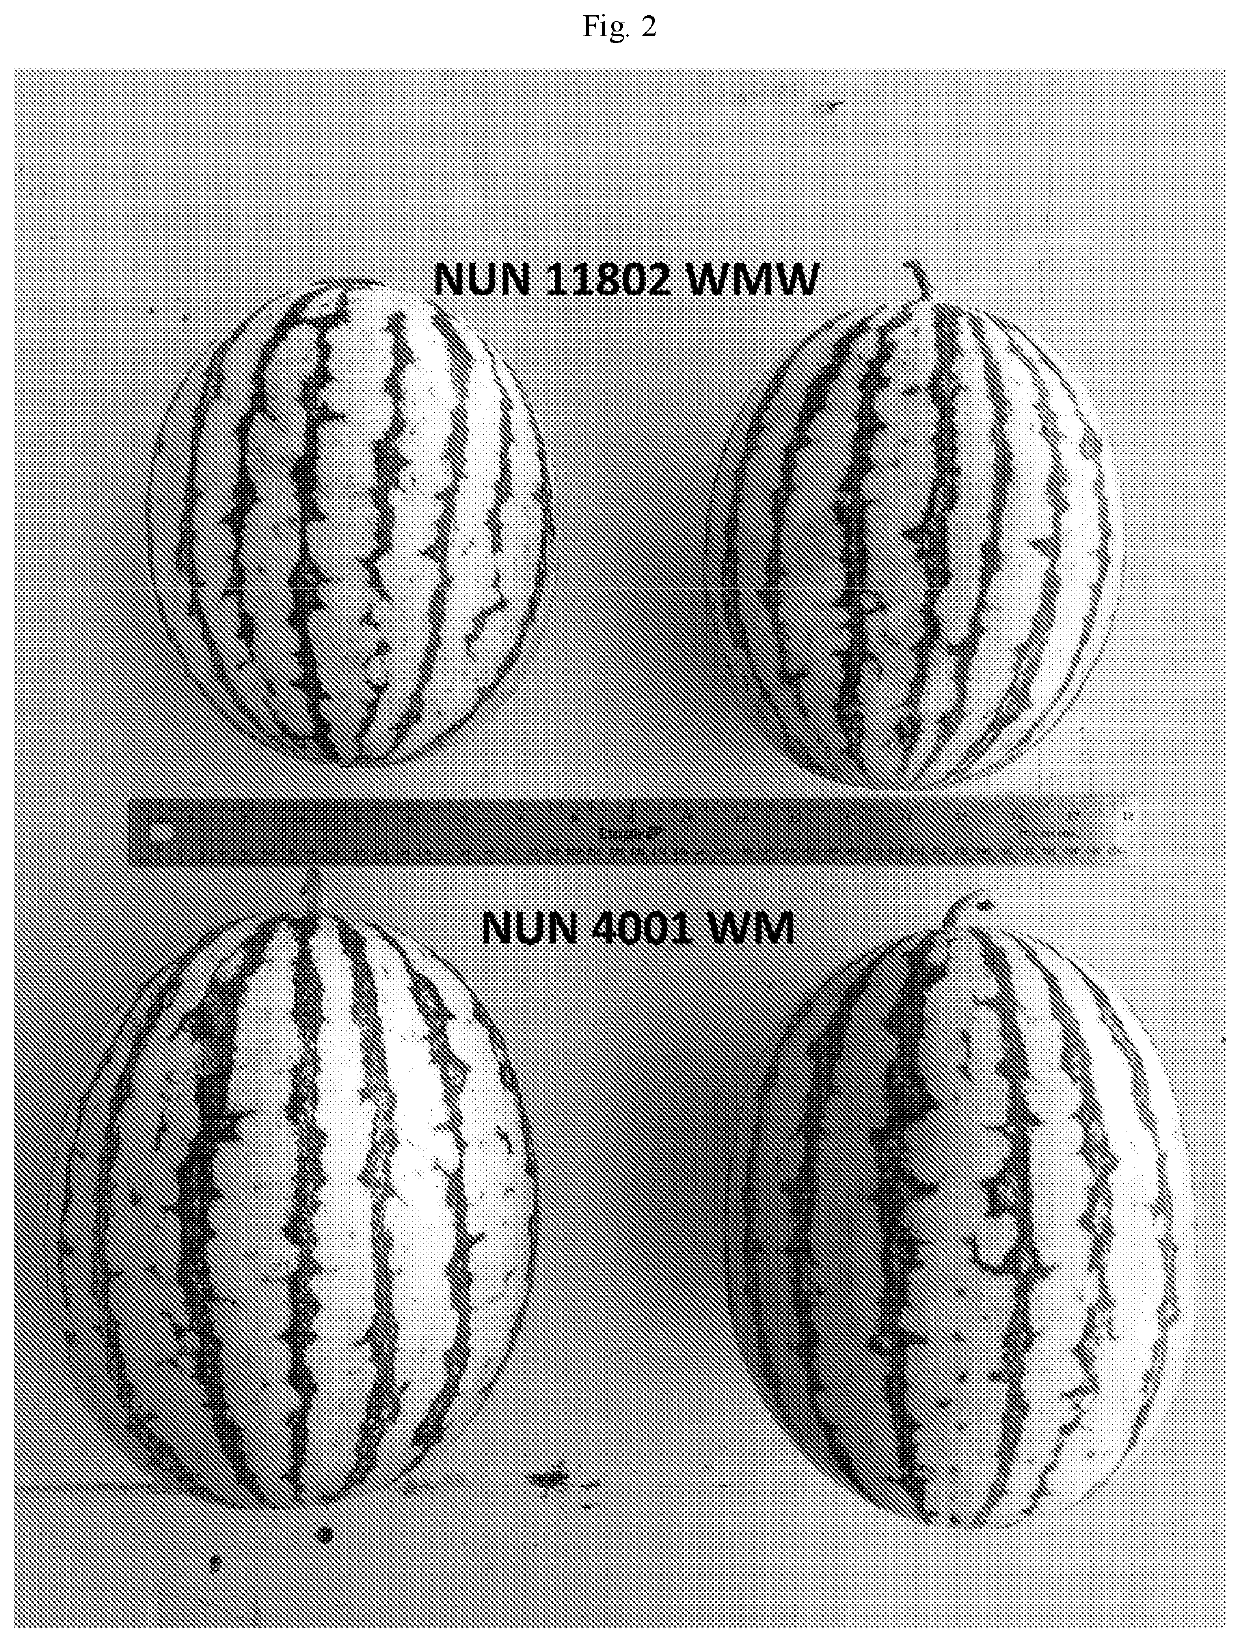 Watermelon variety nun 11802 wmw